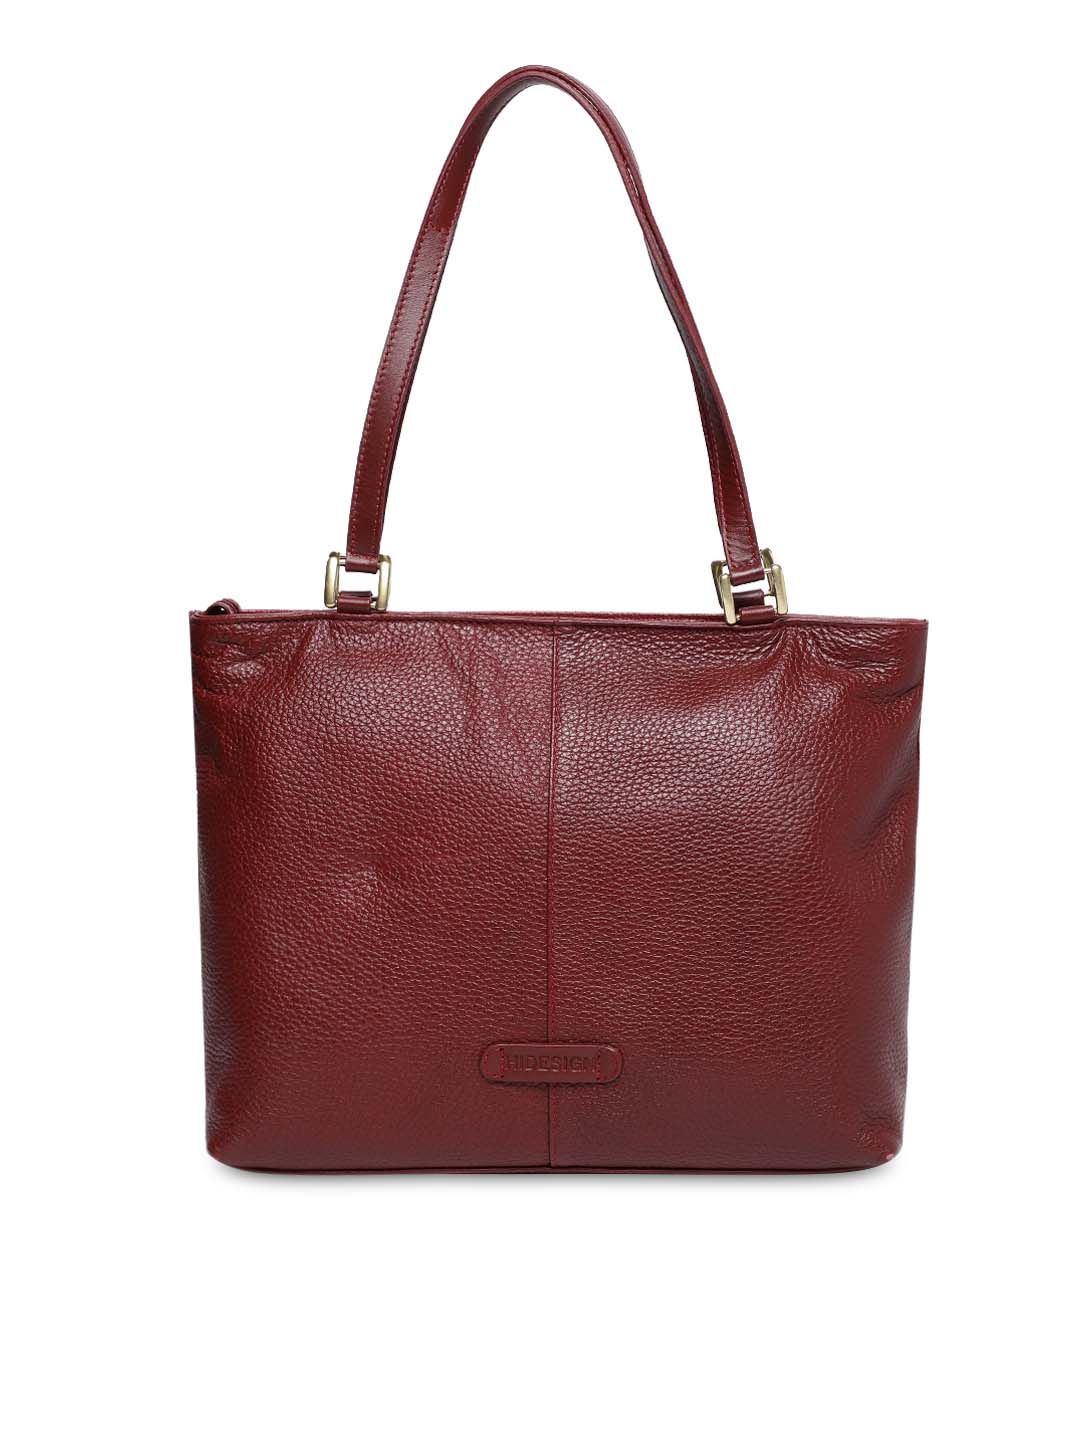 Hidesign Red Textured Shoulder Bag Price in India